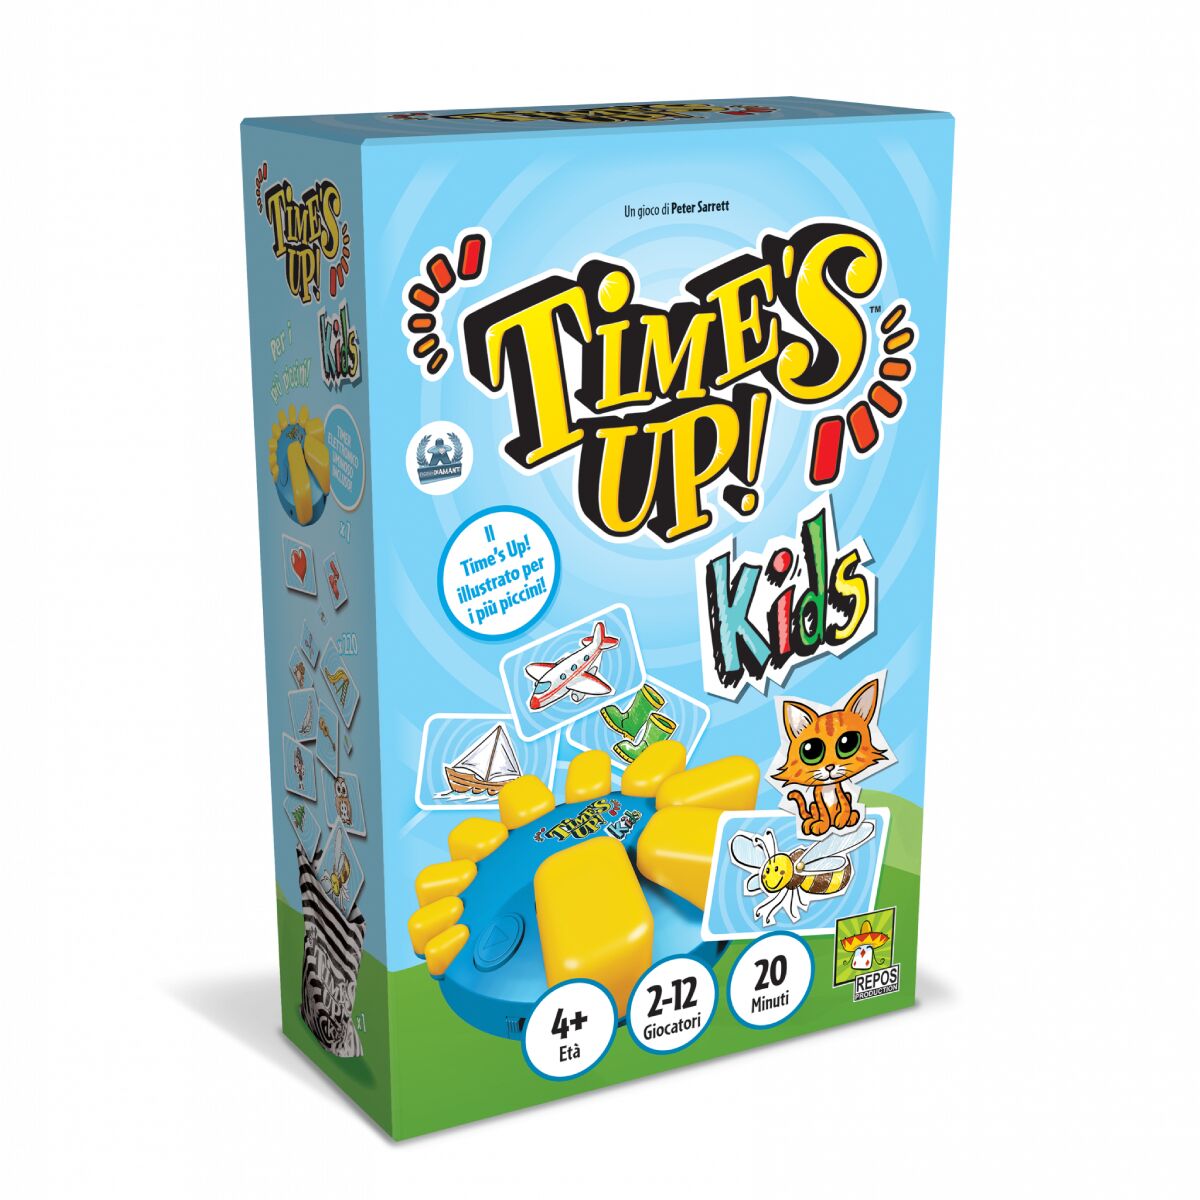 Time’s Up! Kids gioco da tavolo